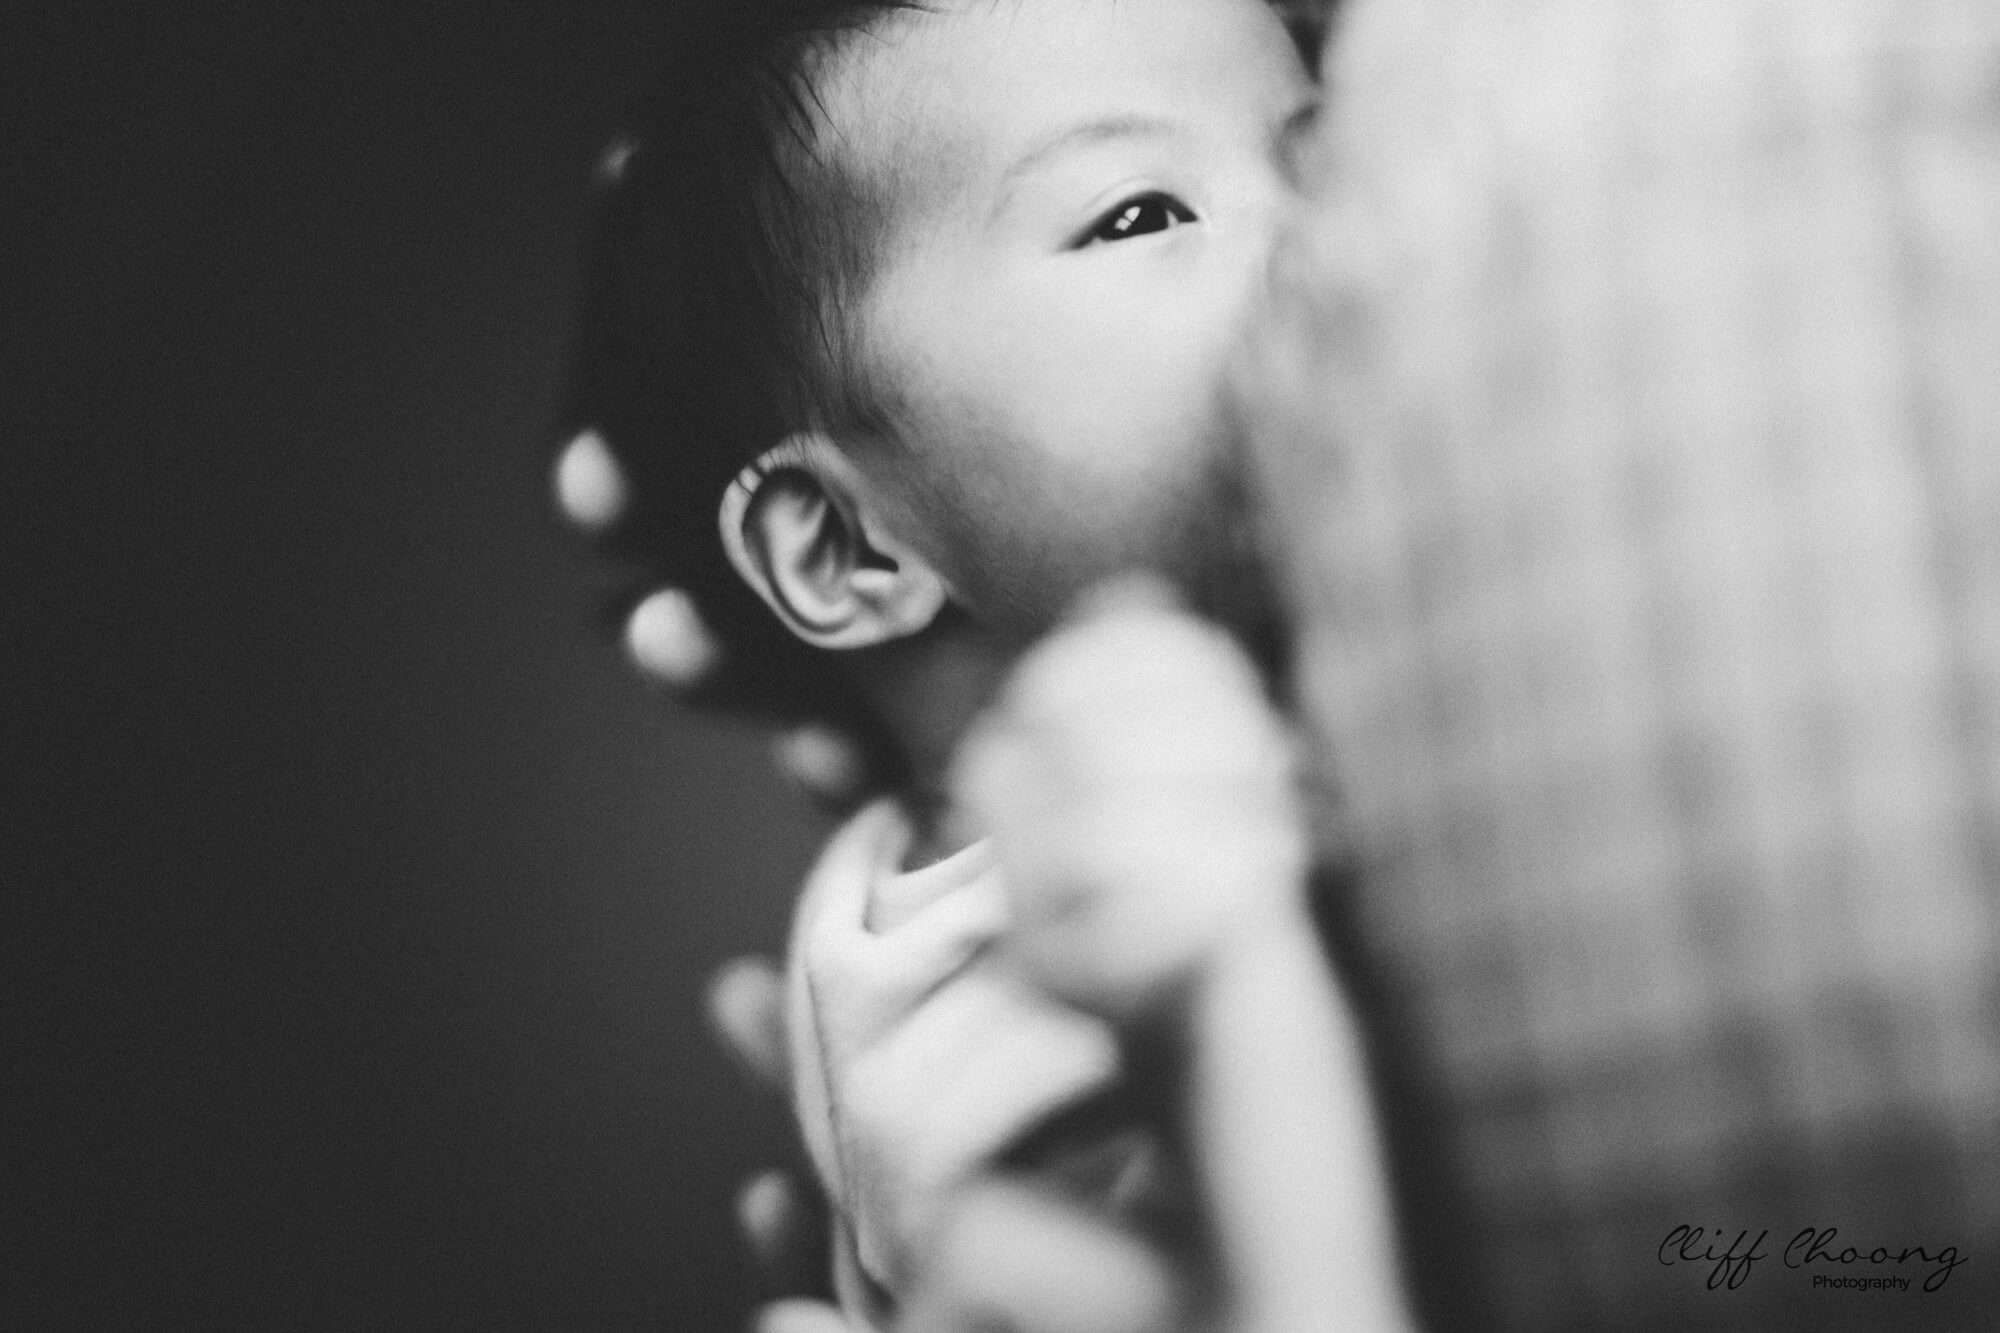 Newborn Baby portrait Malaysia Photographer Cliff Choong